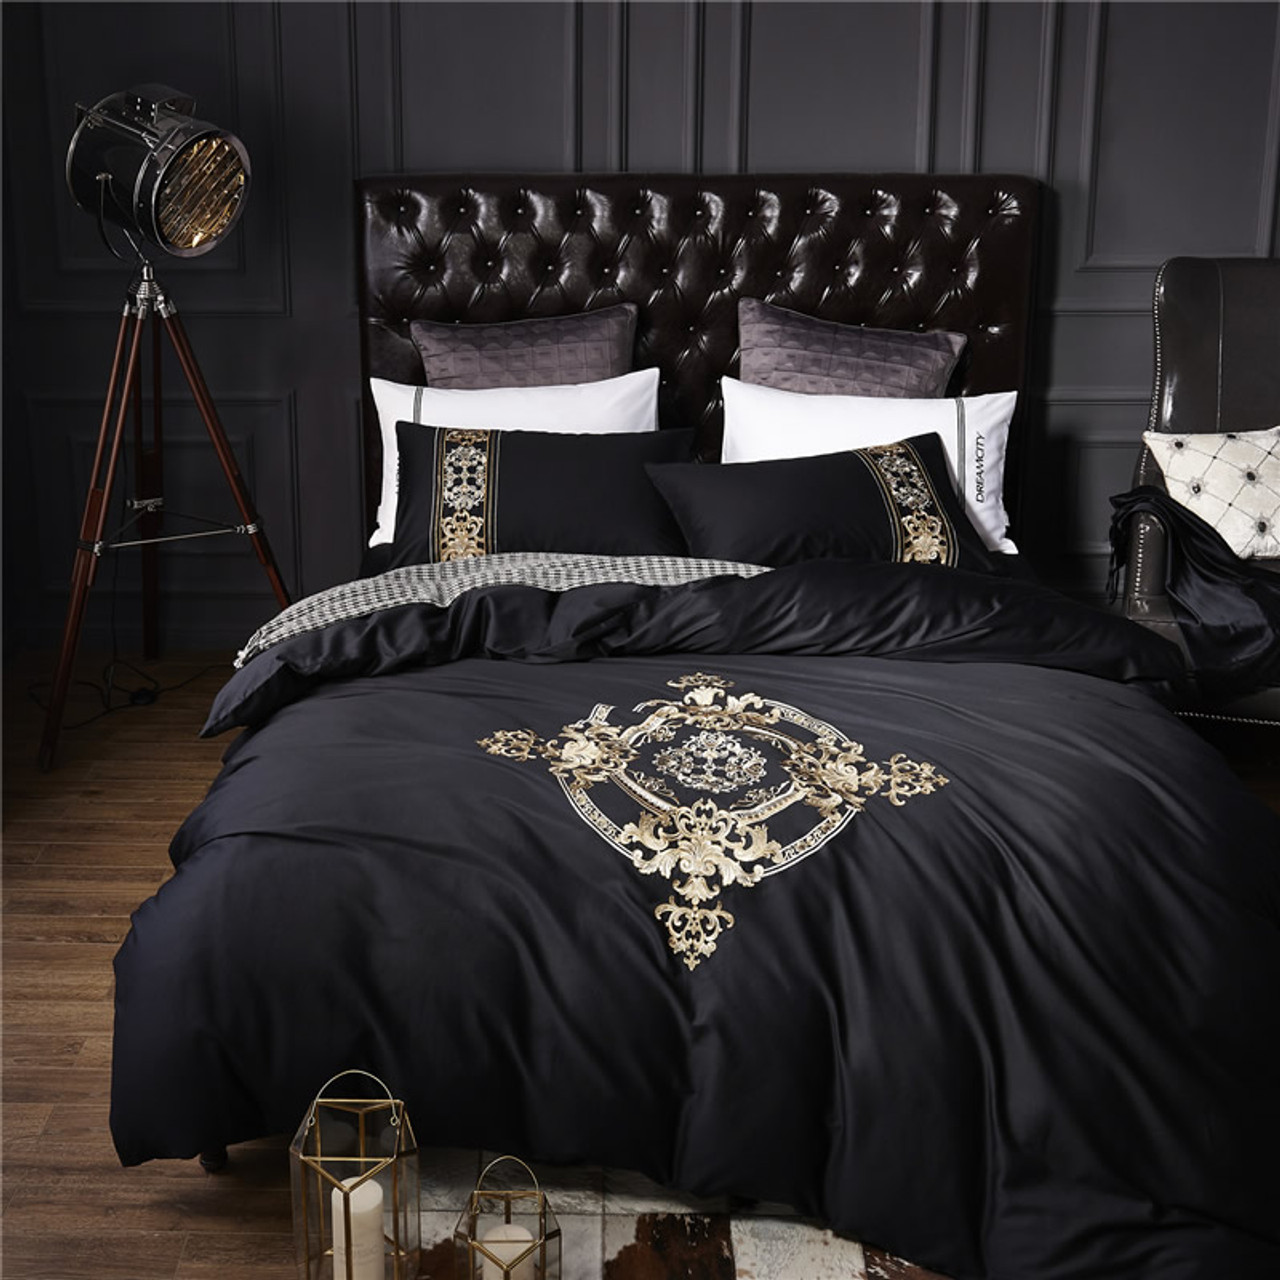 4pcs 100 Cotton Black White Silver Luxury Bedding Sets Bedclothes King Queen Size Duvet Cover Bed Sheet Linens Set Pillowcases Onshopdeals Com